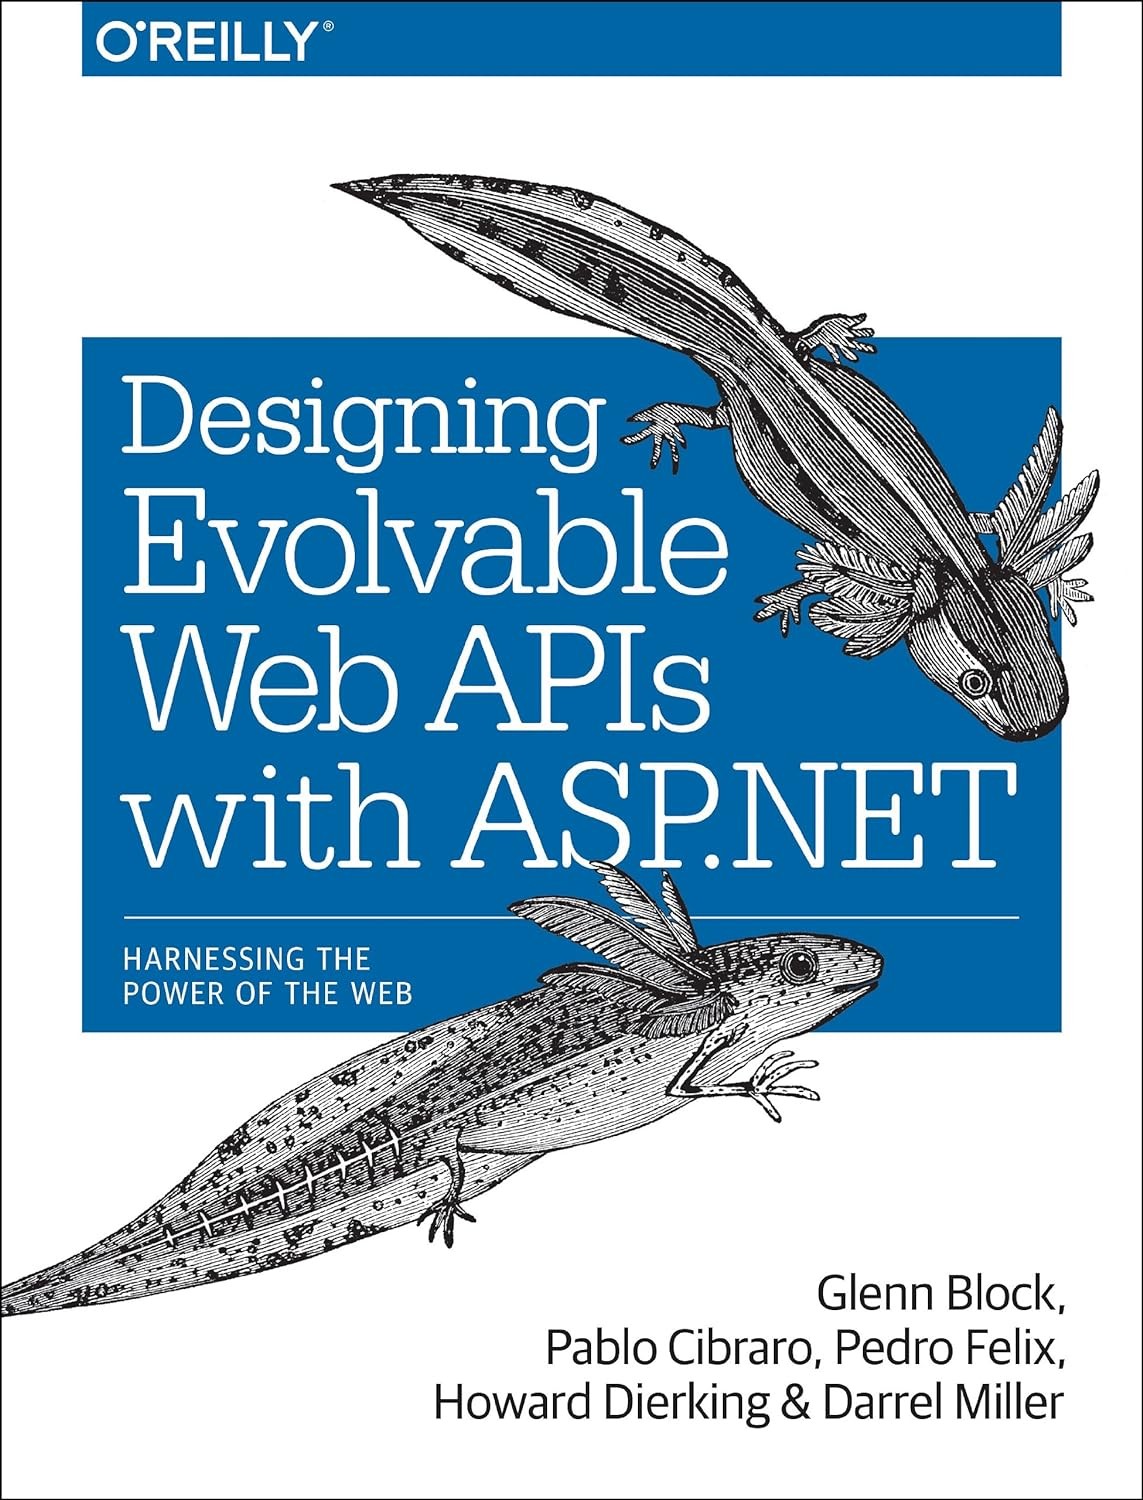 Designing Evolvable Web APIs With ASP.NET